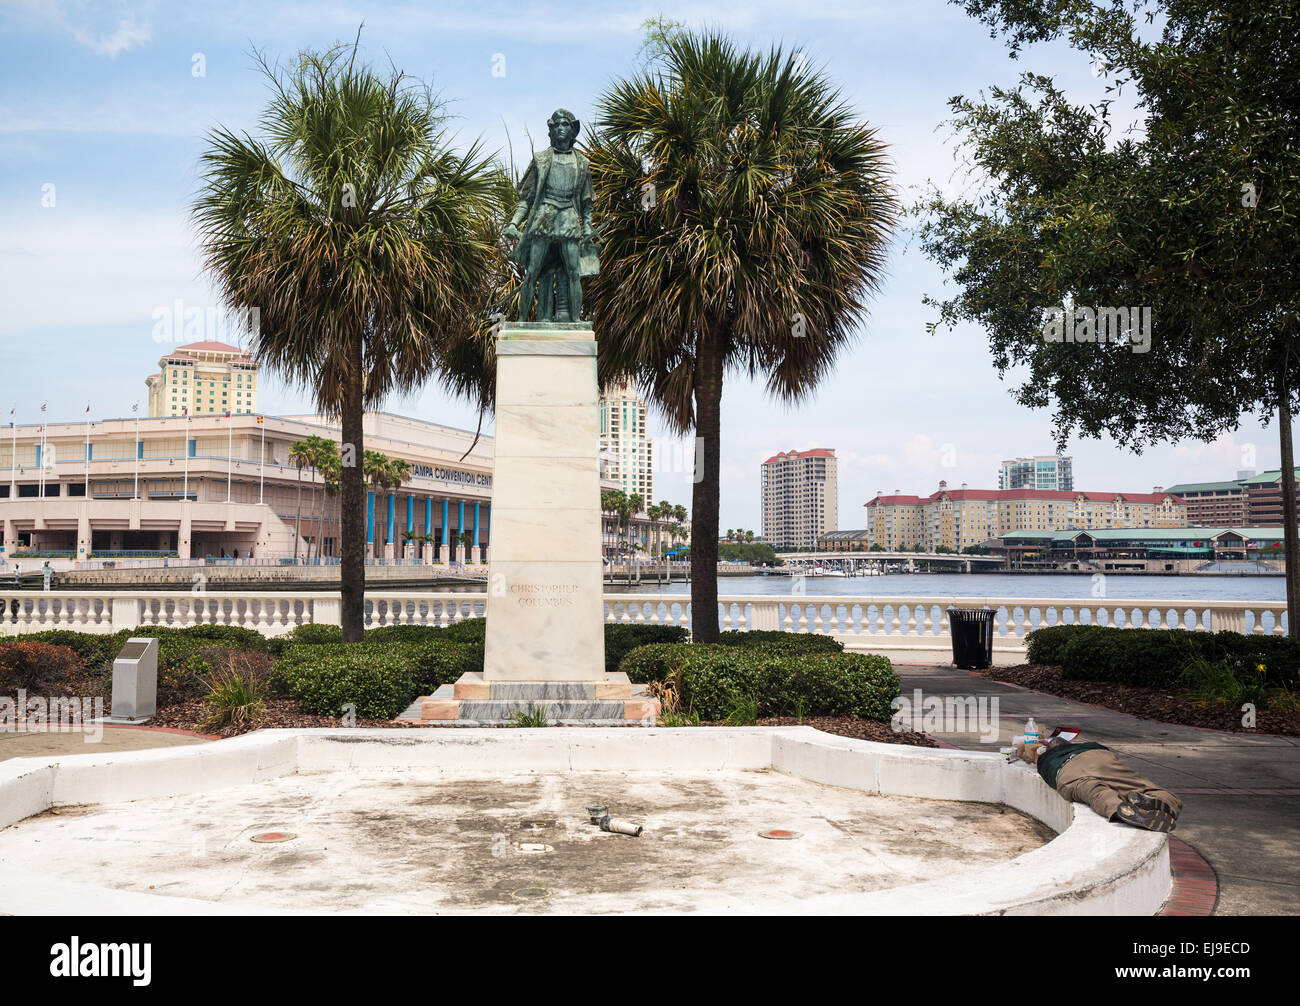 Christopher Columbus statue in Tampa Florida Stock Photo